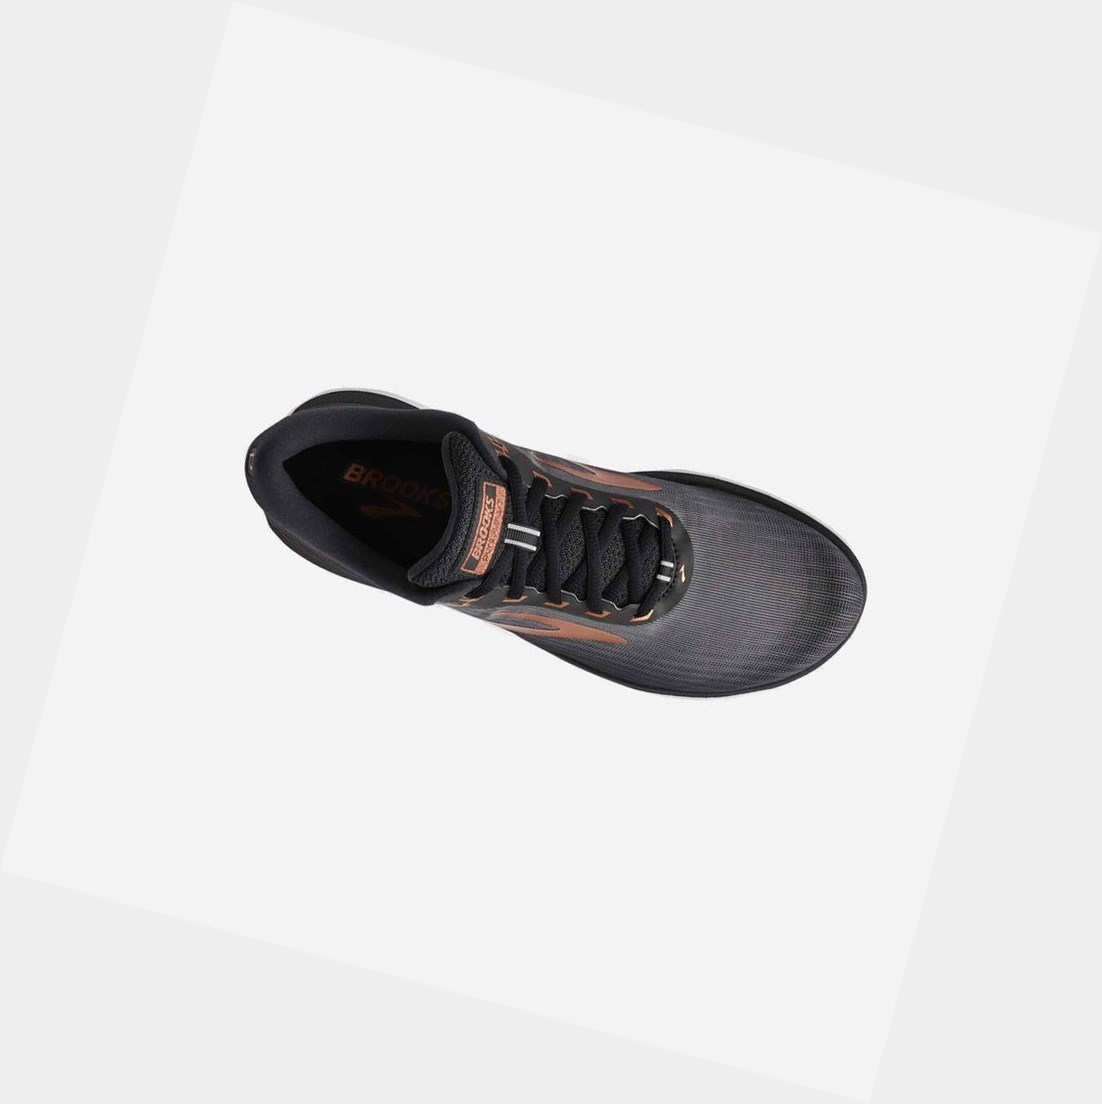 Brooks PureFlow 7 Men's Road Running Shoes Grey / Black / Copper | PXOL-21354